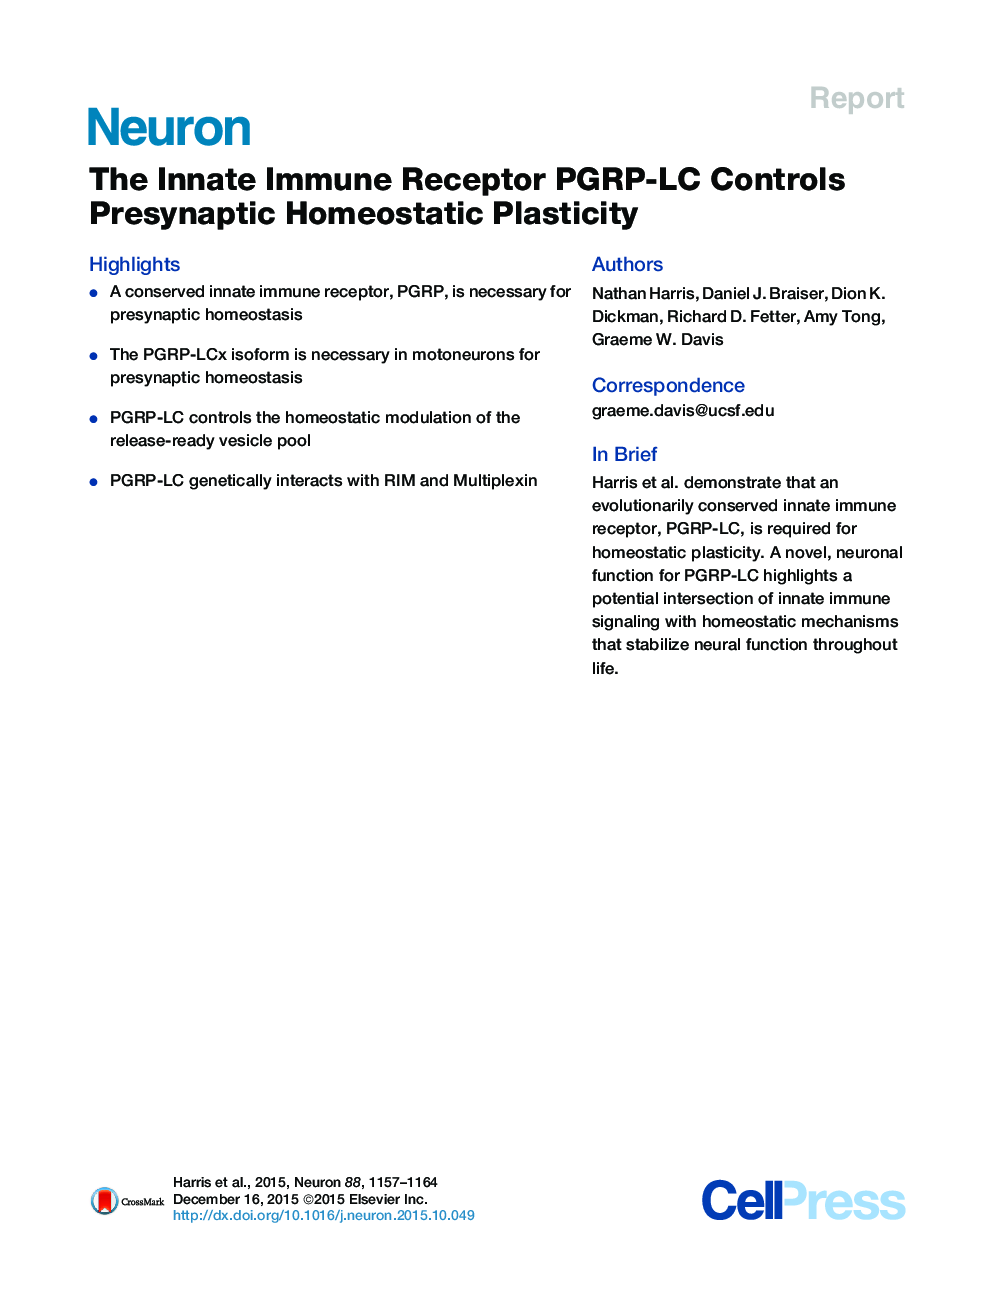 The Innate Immune Receptor PGRP-LC Controls Presynaptic Homeostatic Plasticity